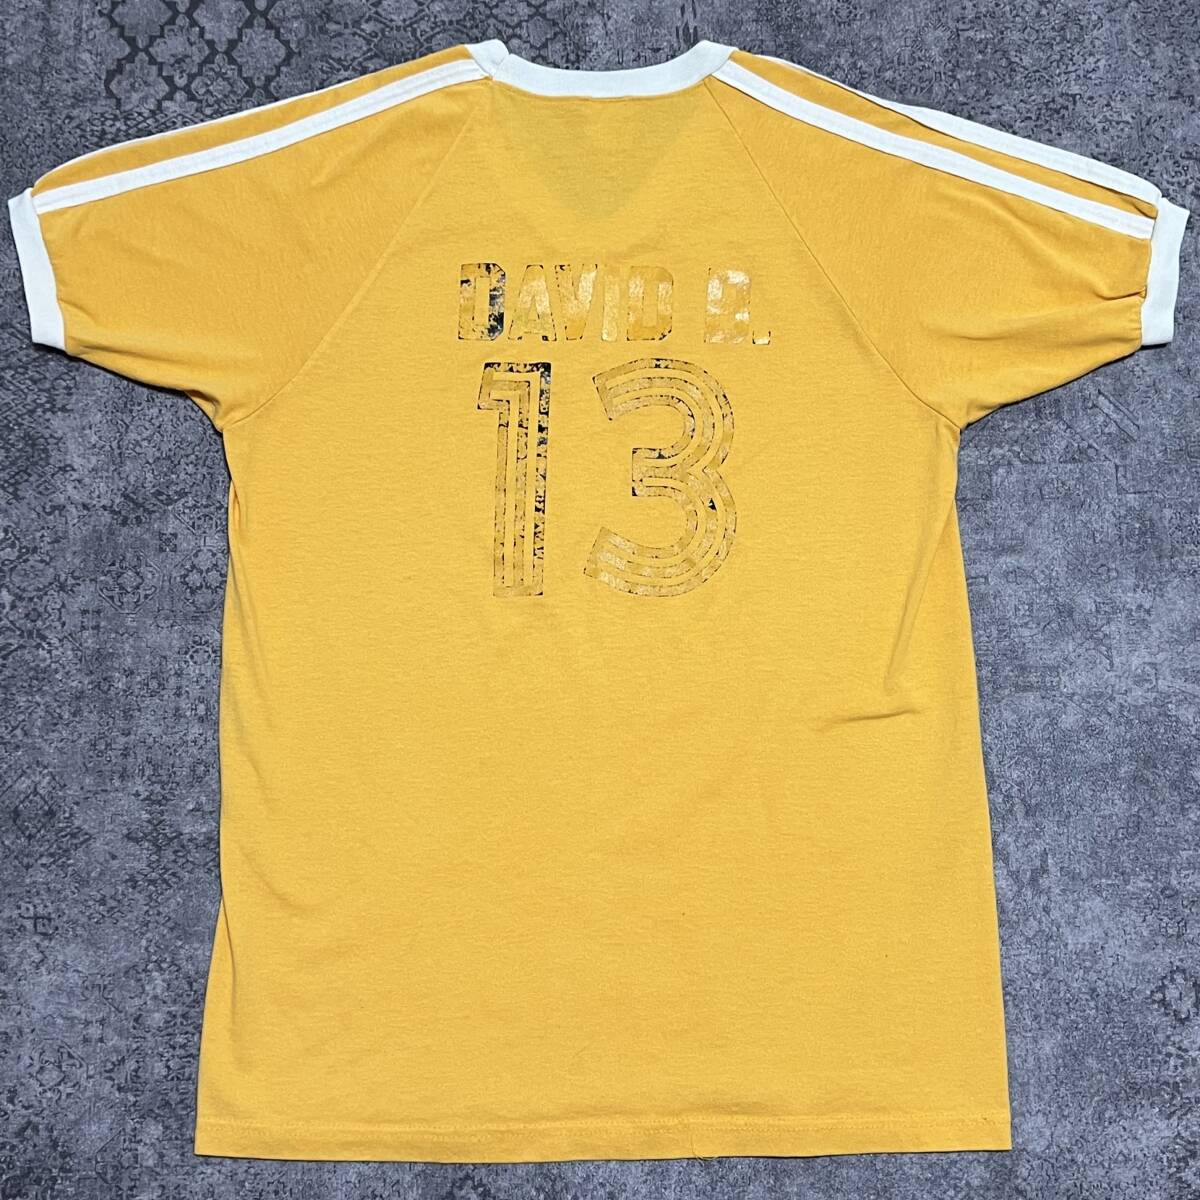 USA製 90s Augusta ゲームシャツ Tシャツ ユニフォーム イエロー 90年代 ヴィンテージ ビンテージ vintage_画像2